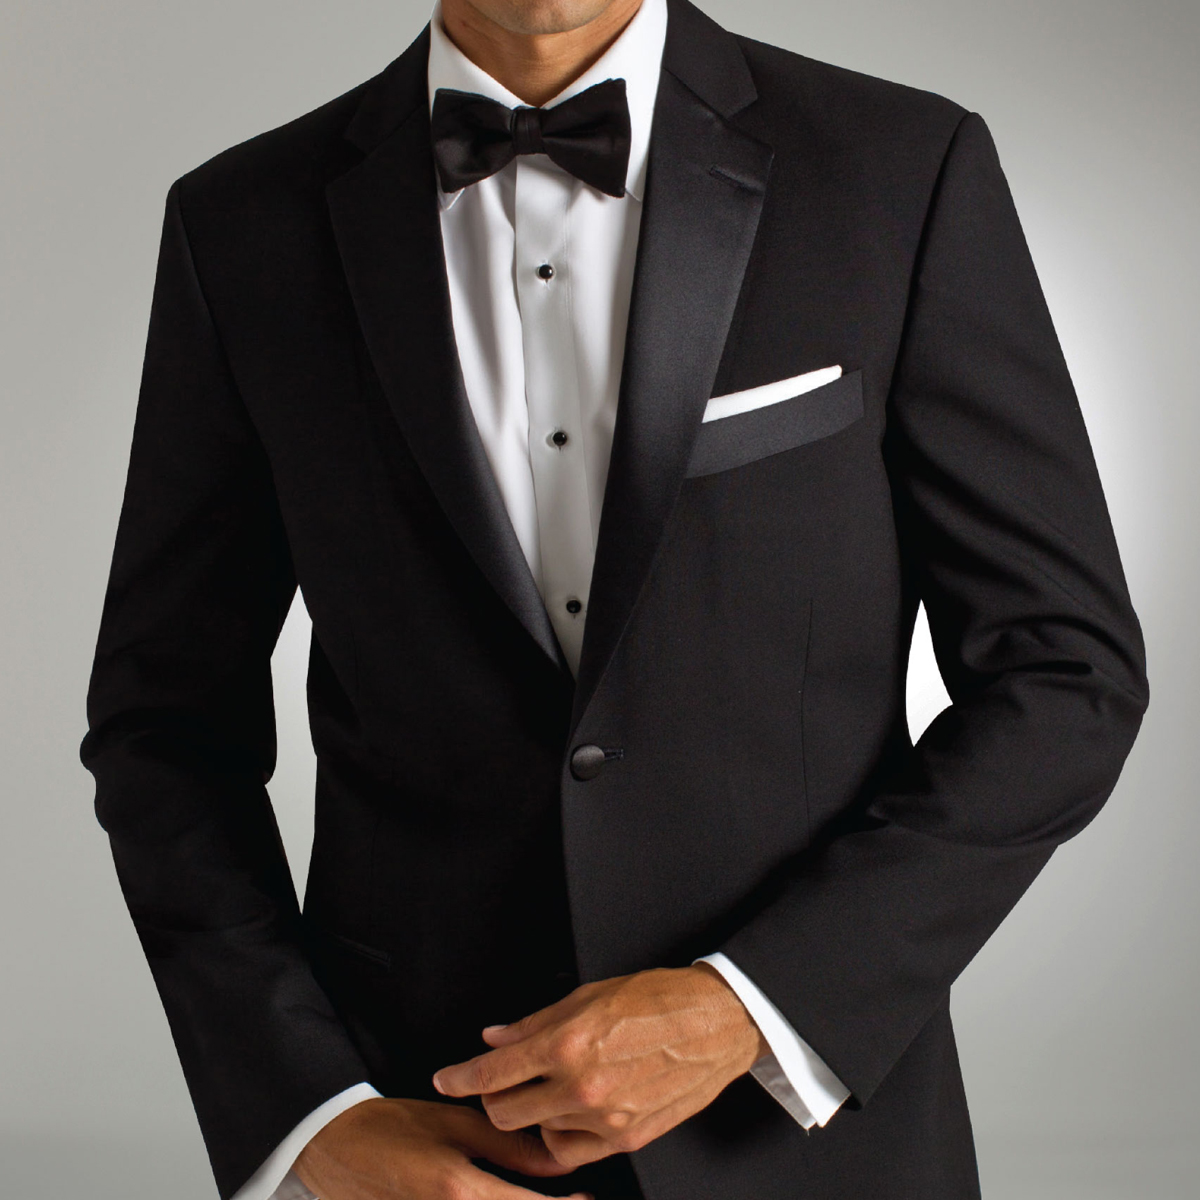 Purchase Accessories | Tuxedo Junction | Men's Suits, Tuxedos ...